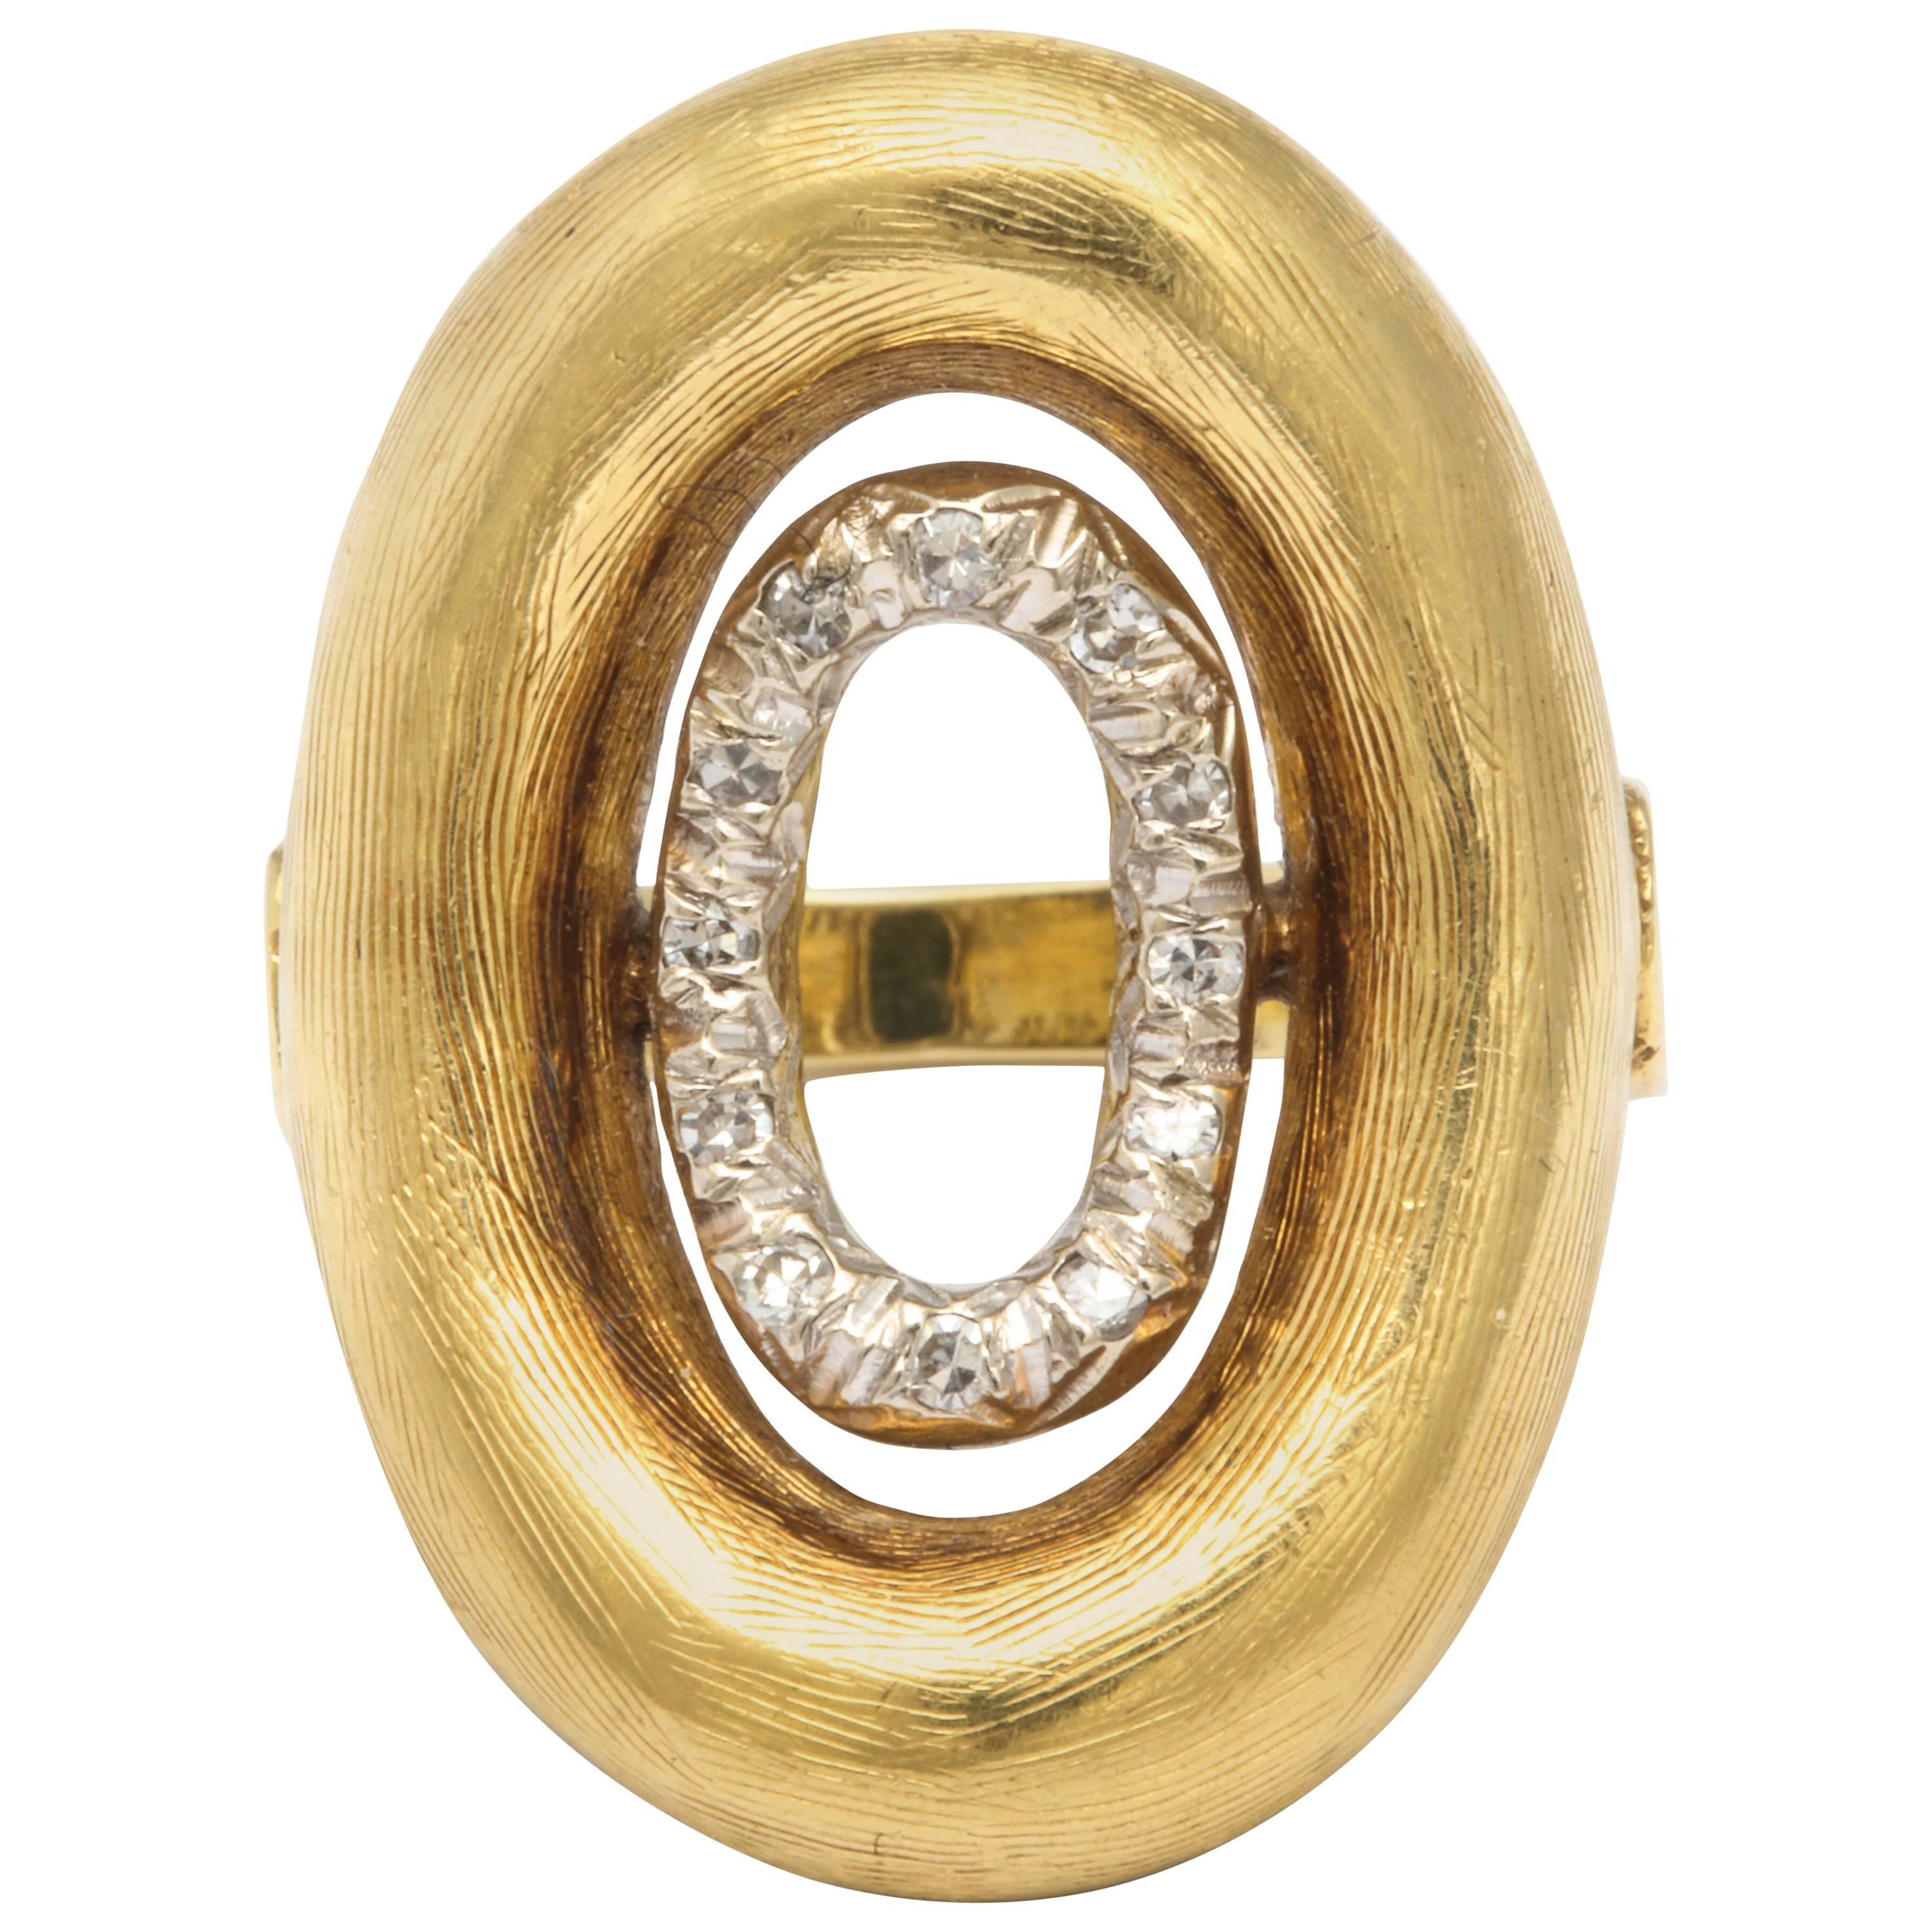 Modernist Design Gold and Diamond Ring